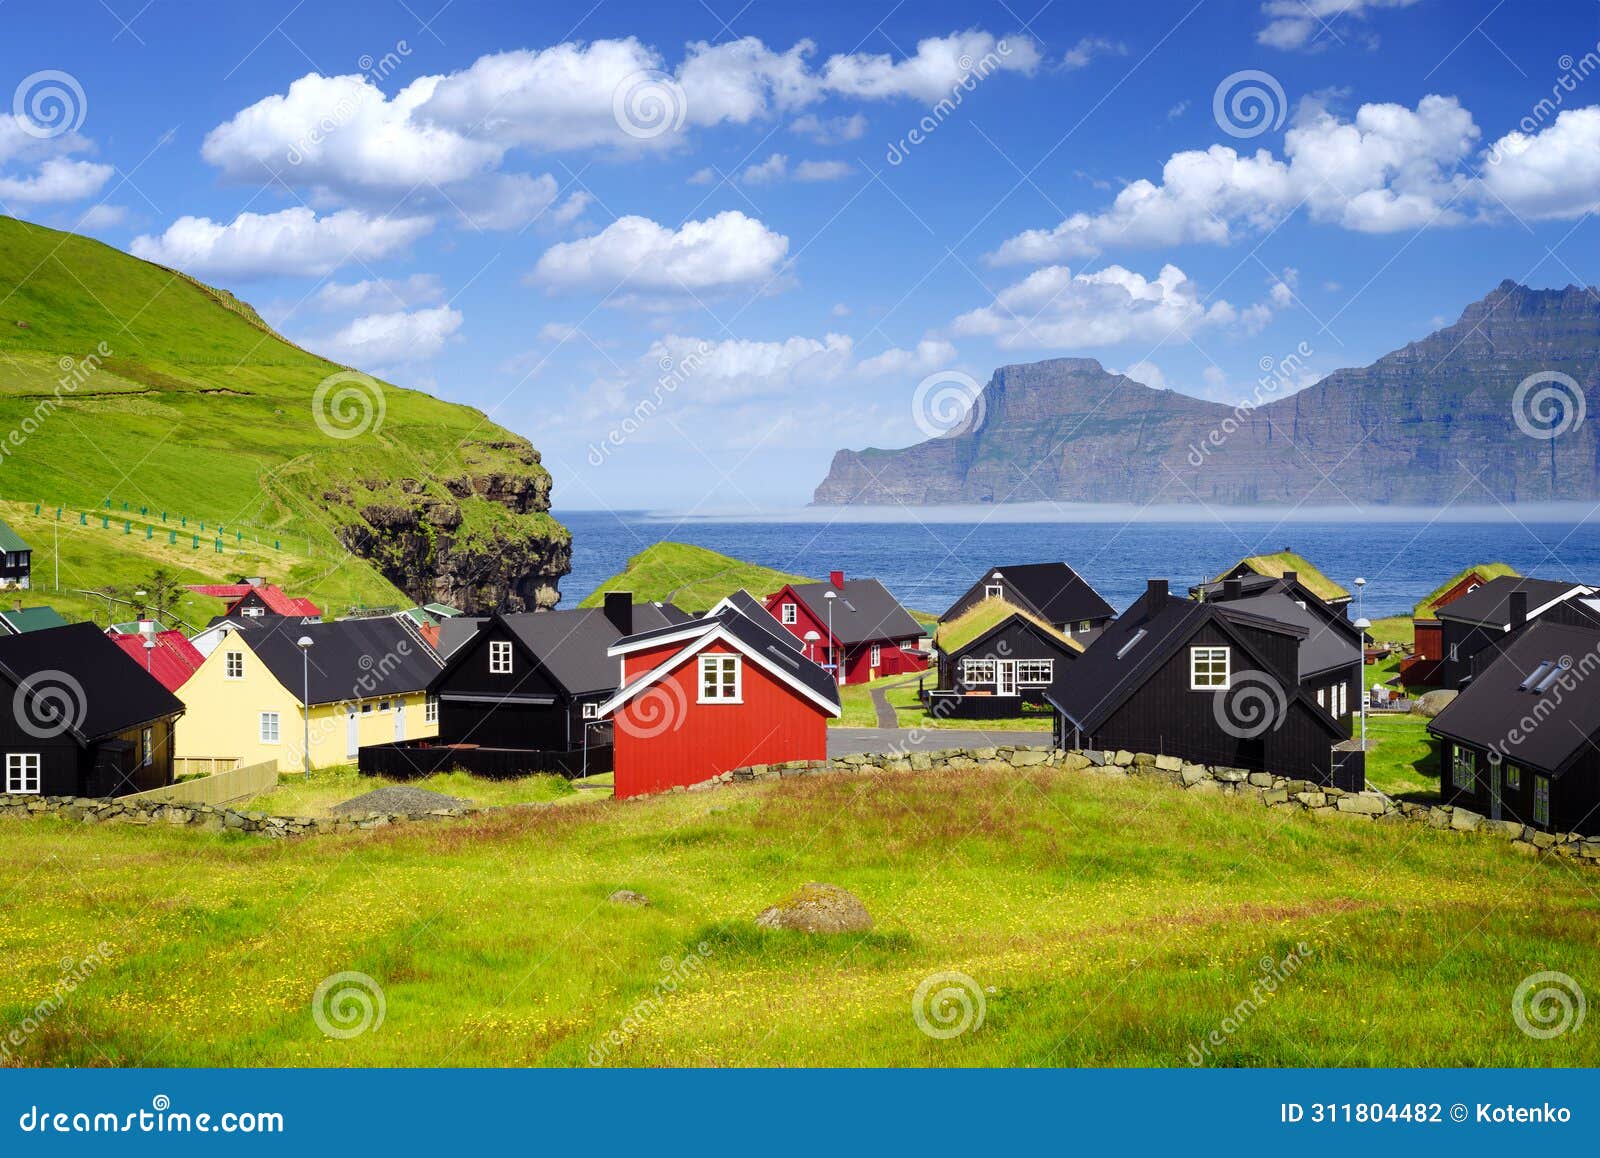 colorful houses in the village of gjogv, eysturoy island, faroe islands